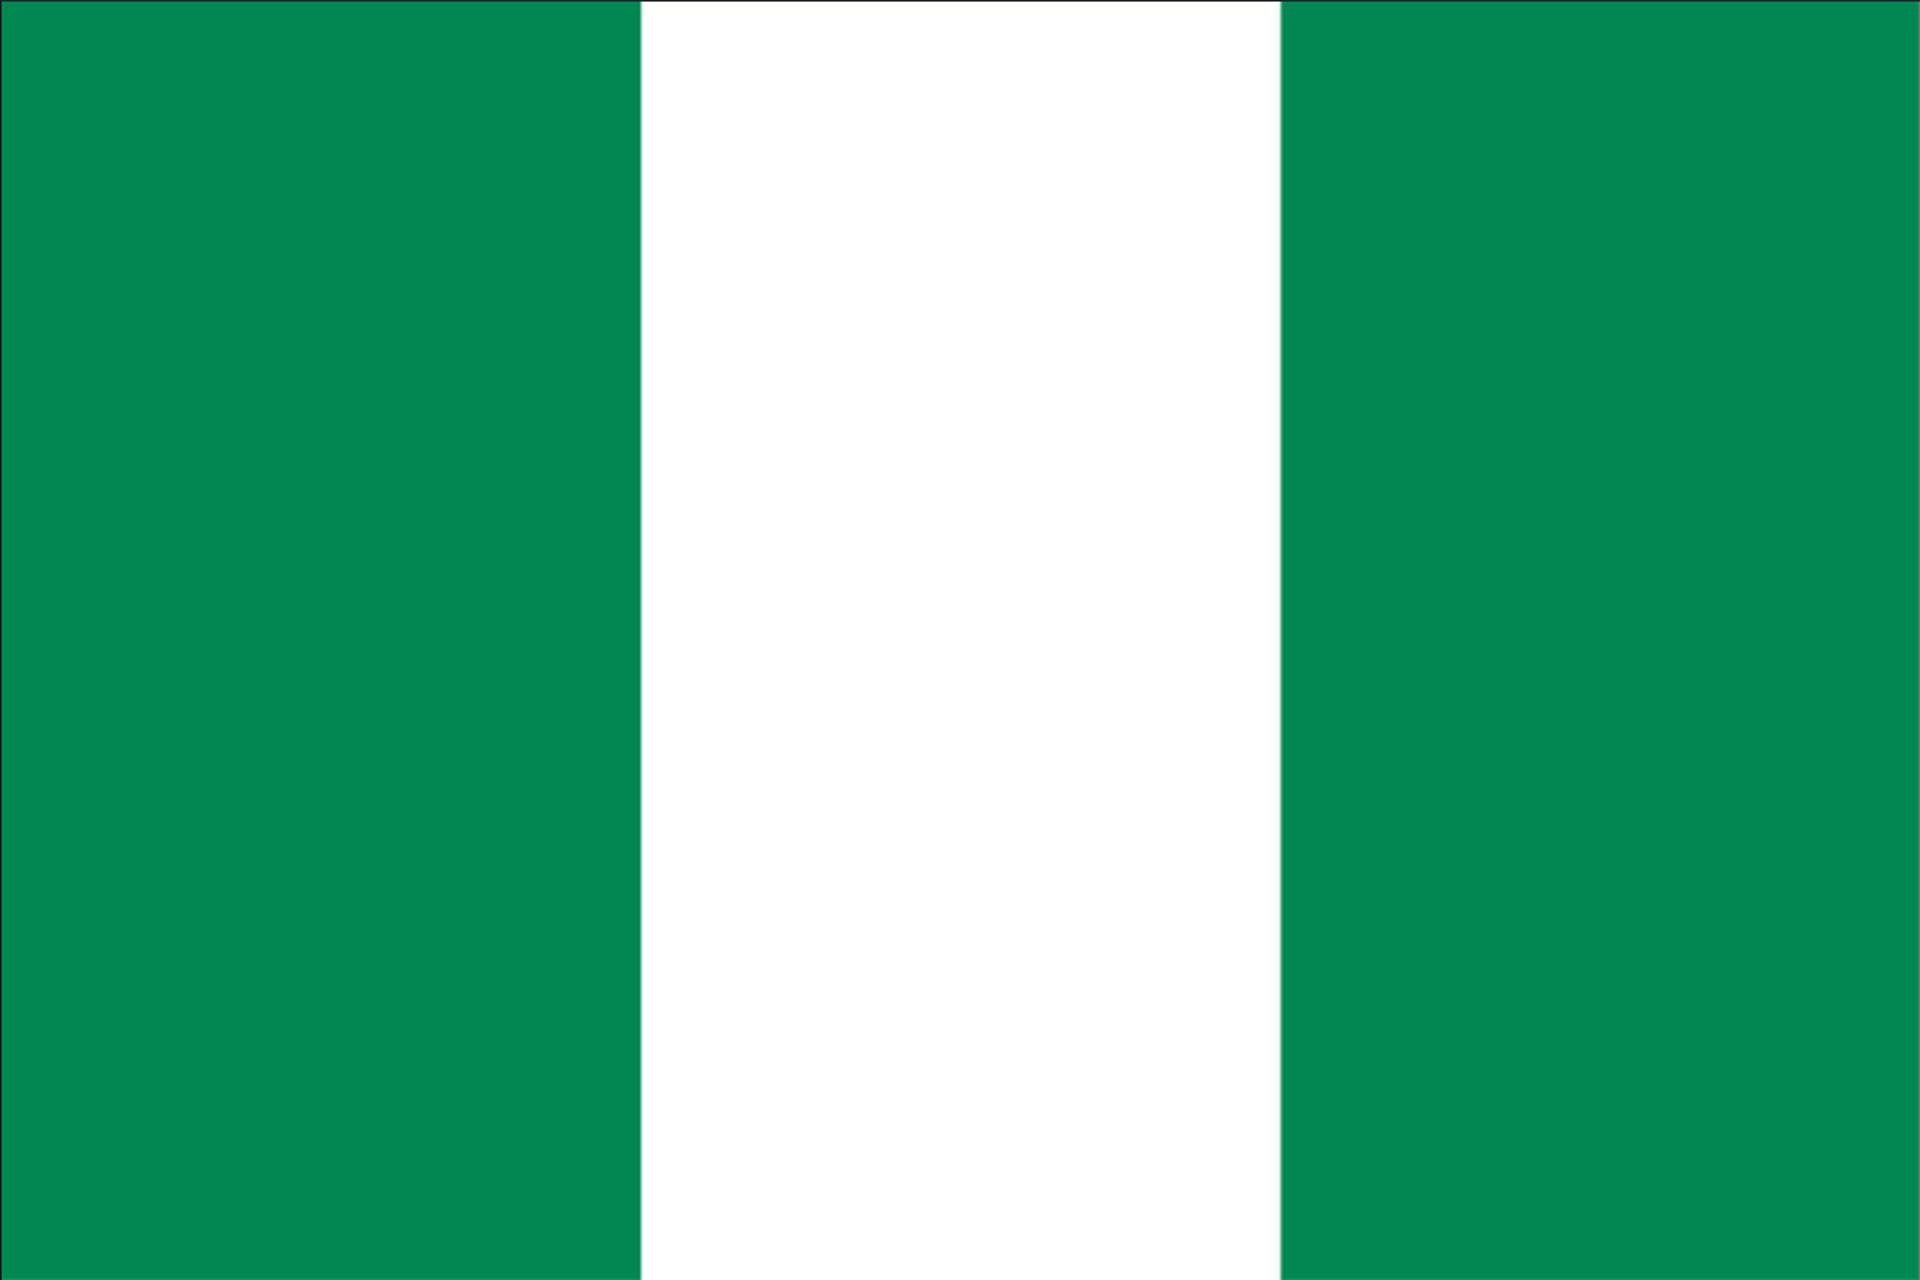 Nigeria g/m² 80 flaggenmeer Flagge